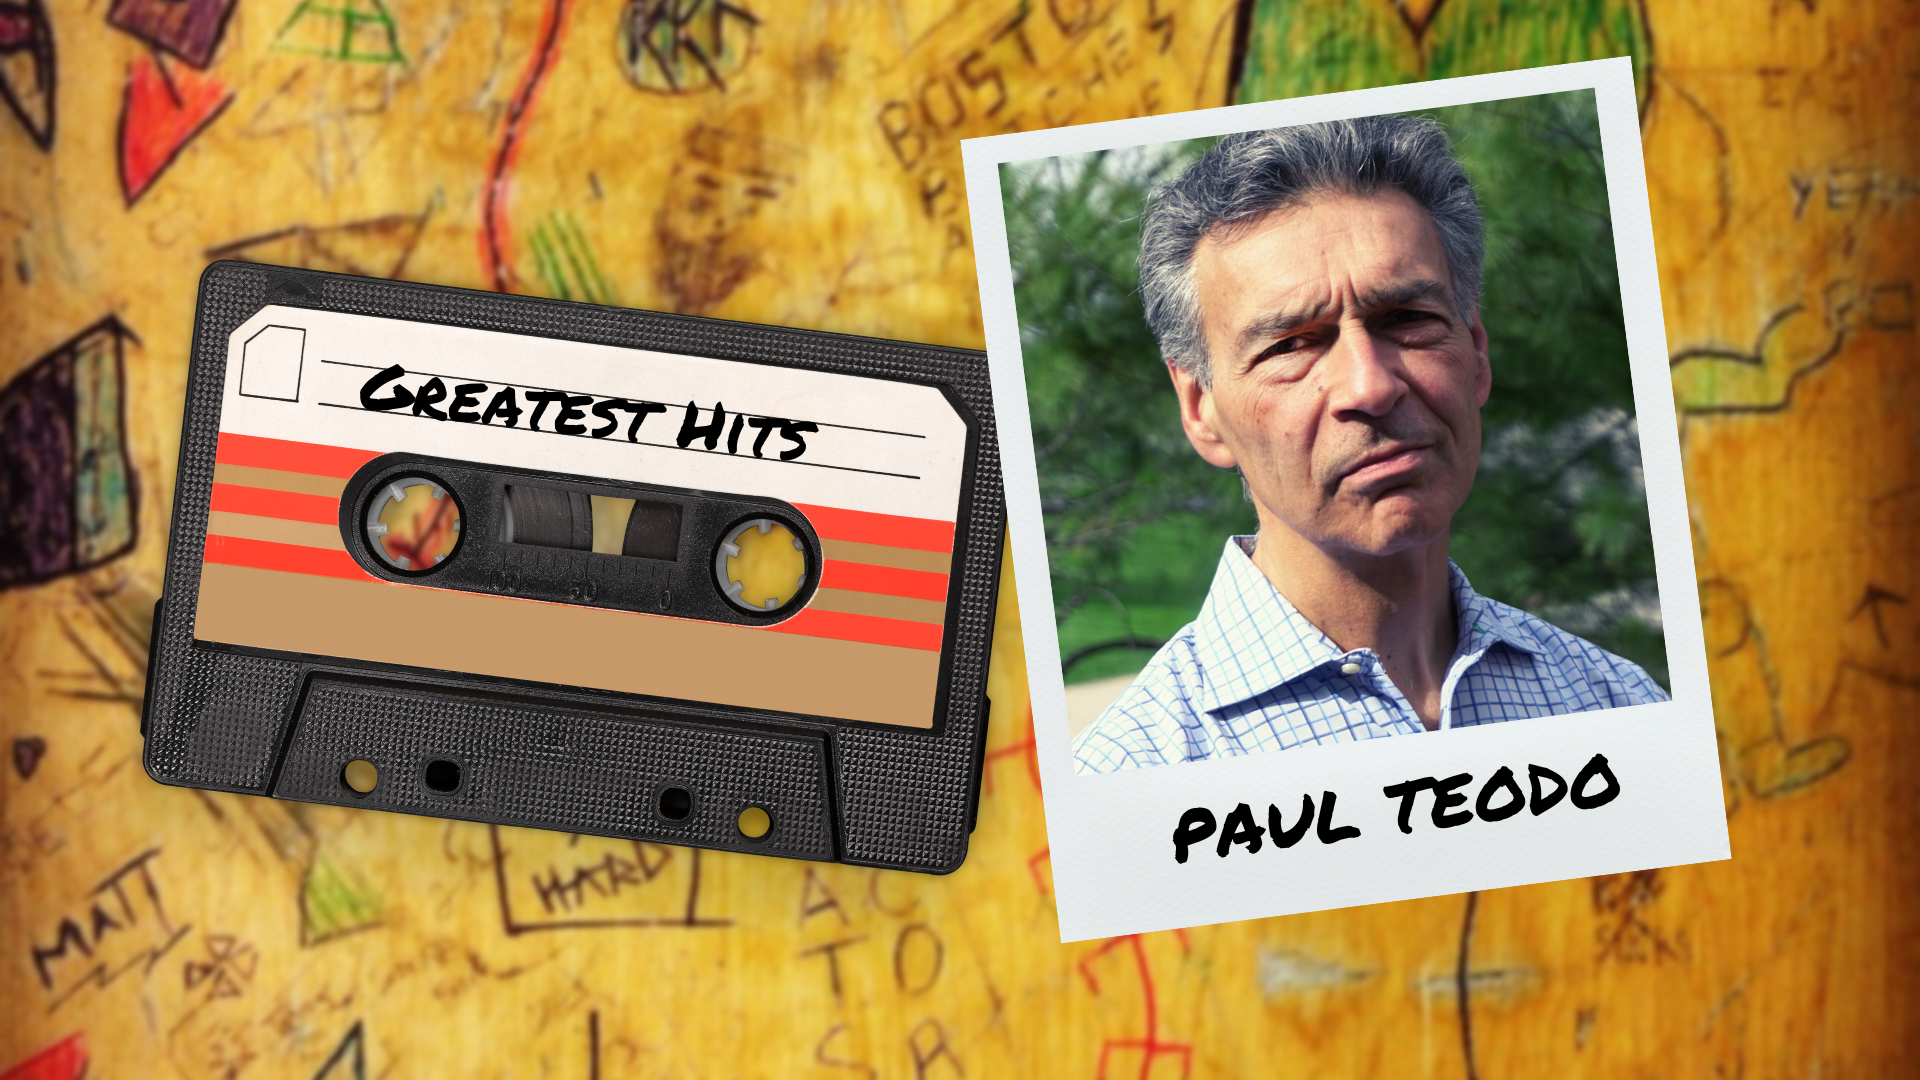 Solo Sunday Presents "Paul Teodo: Greatest Hits"